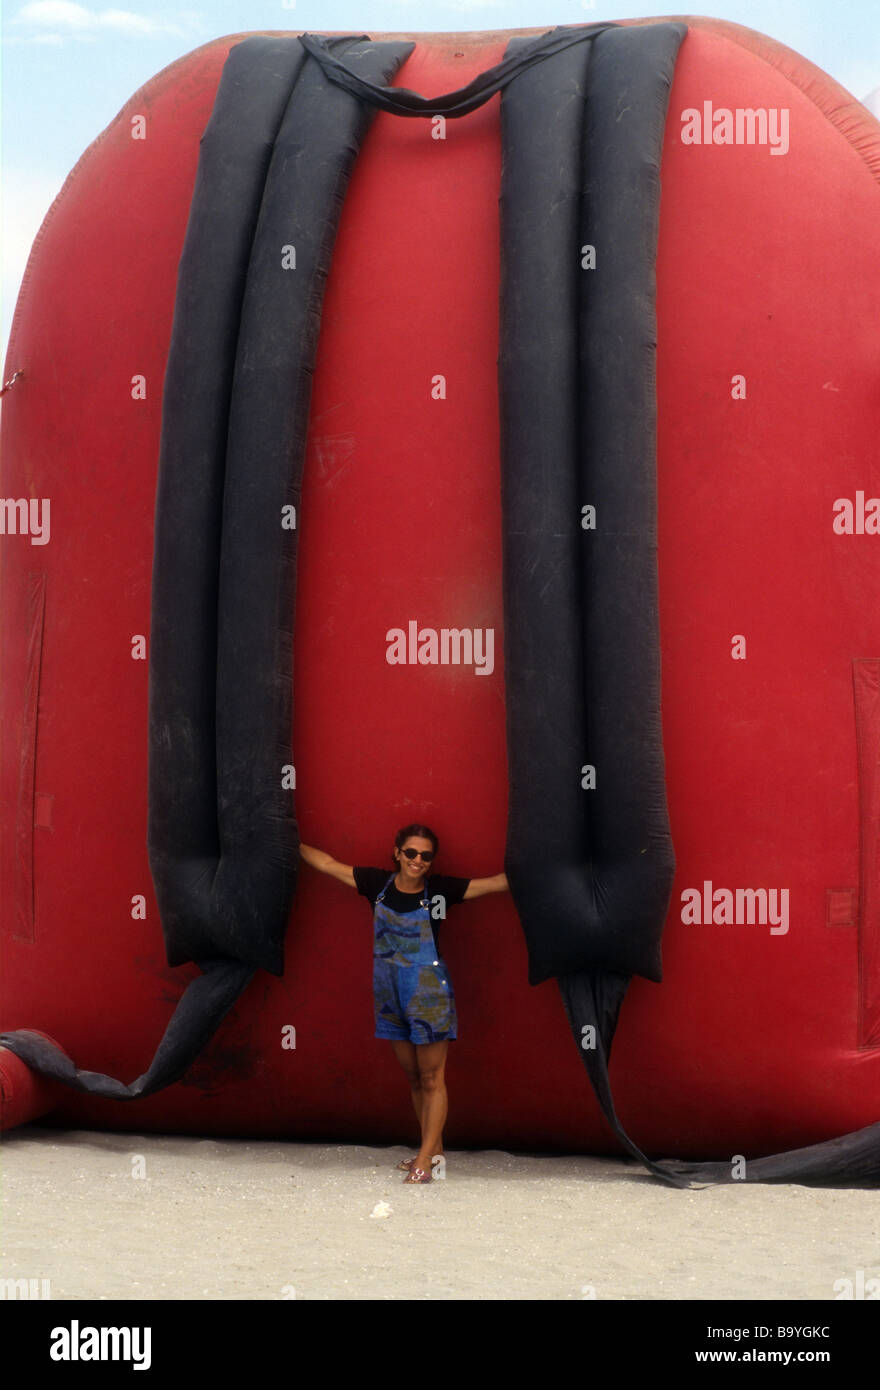 Mochila inflable gigante e imágenes alta Alamy